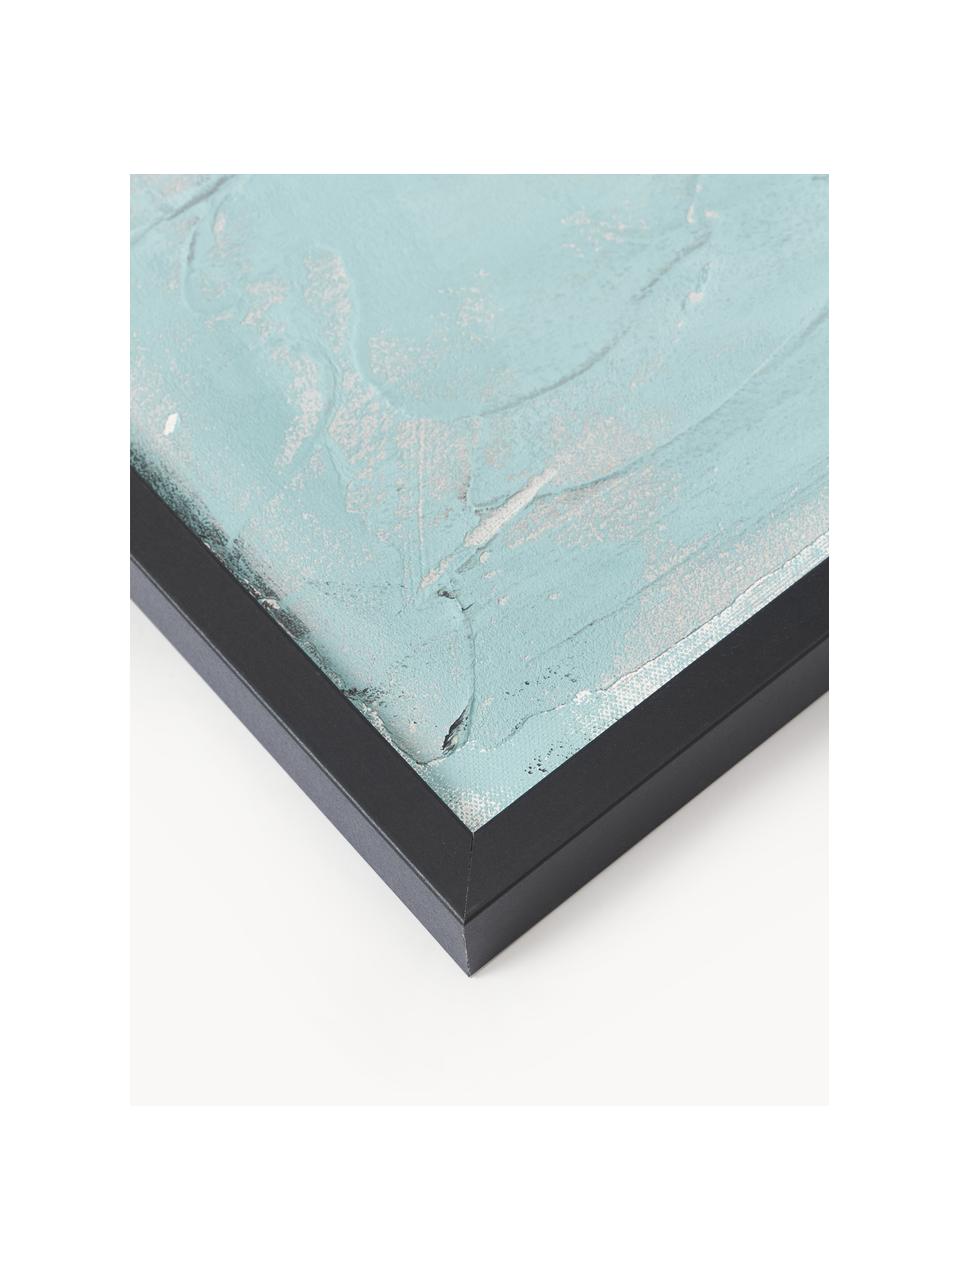 Handgemaltes Leinwandbild Simple Living mit Holzrahmen, Bild: Acrylfarbe, Rahmen: Eichenholz, beschichtet, Türkis, Schwarz, B 92 x H 120 cm